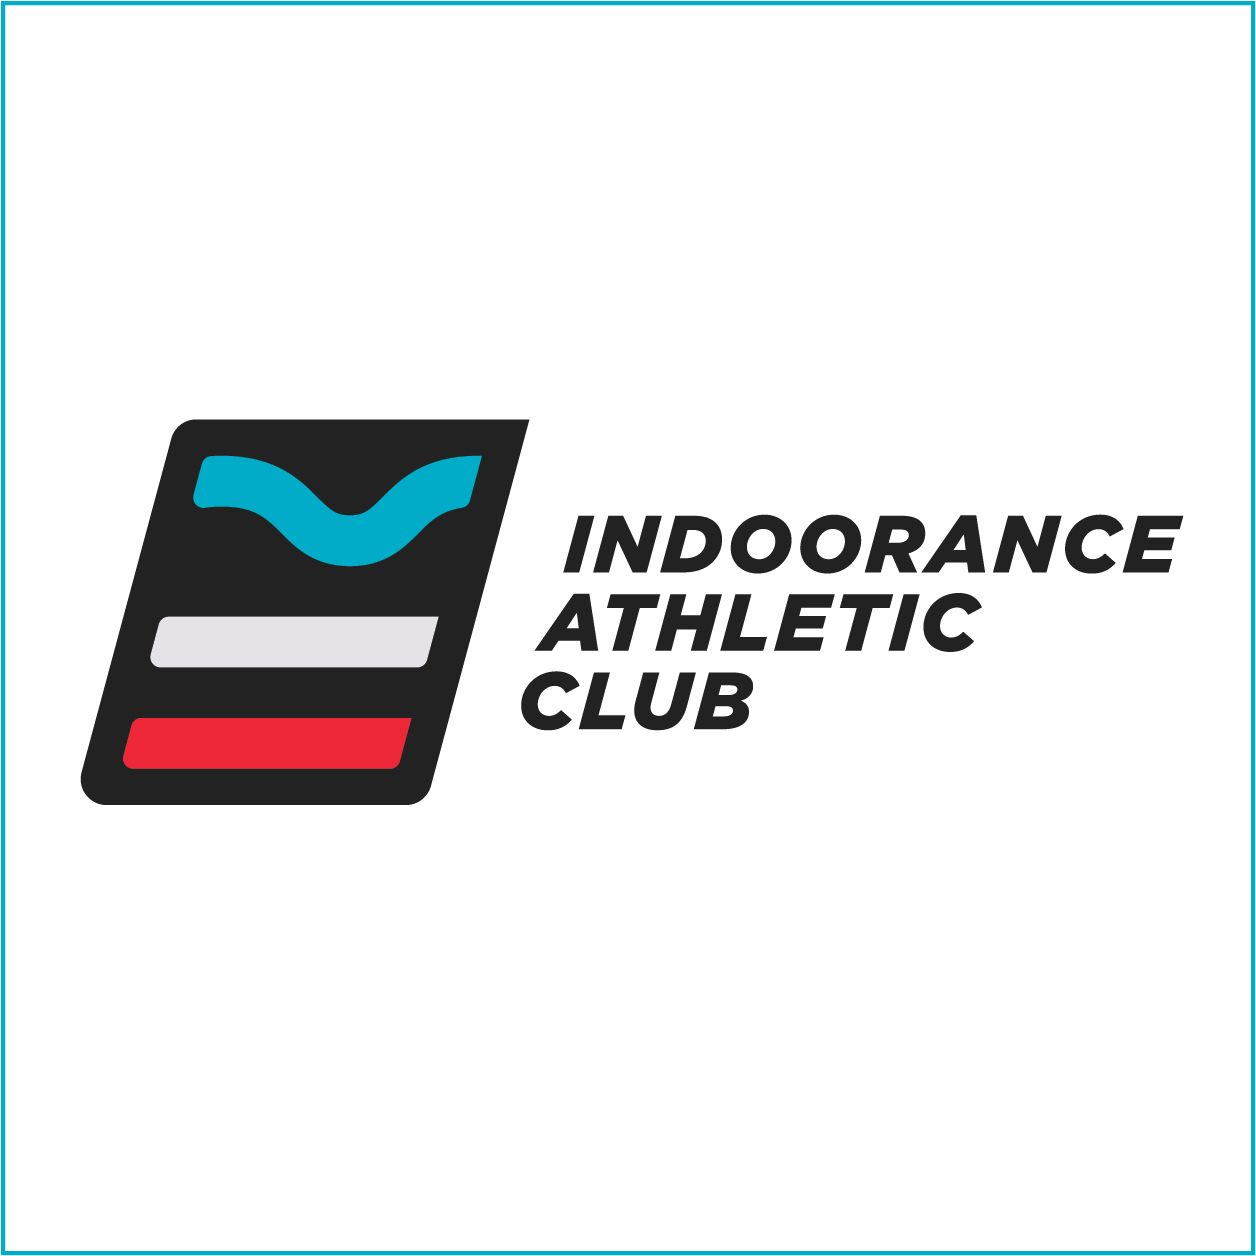 Indoorance Athletic Club